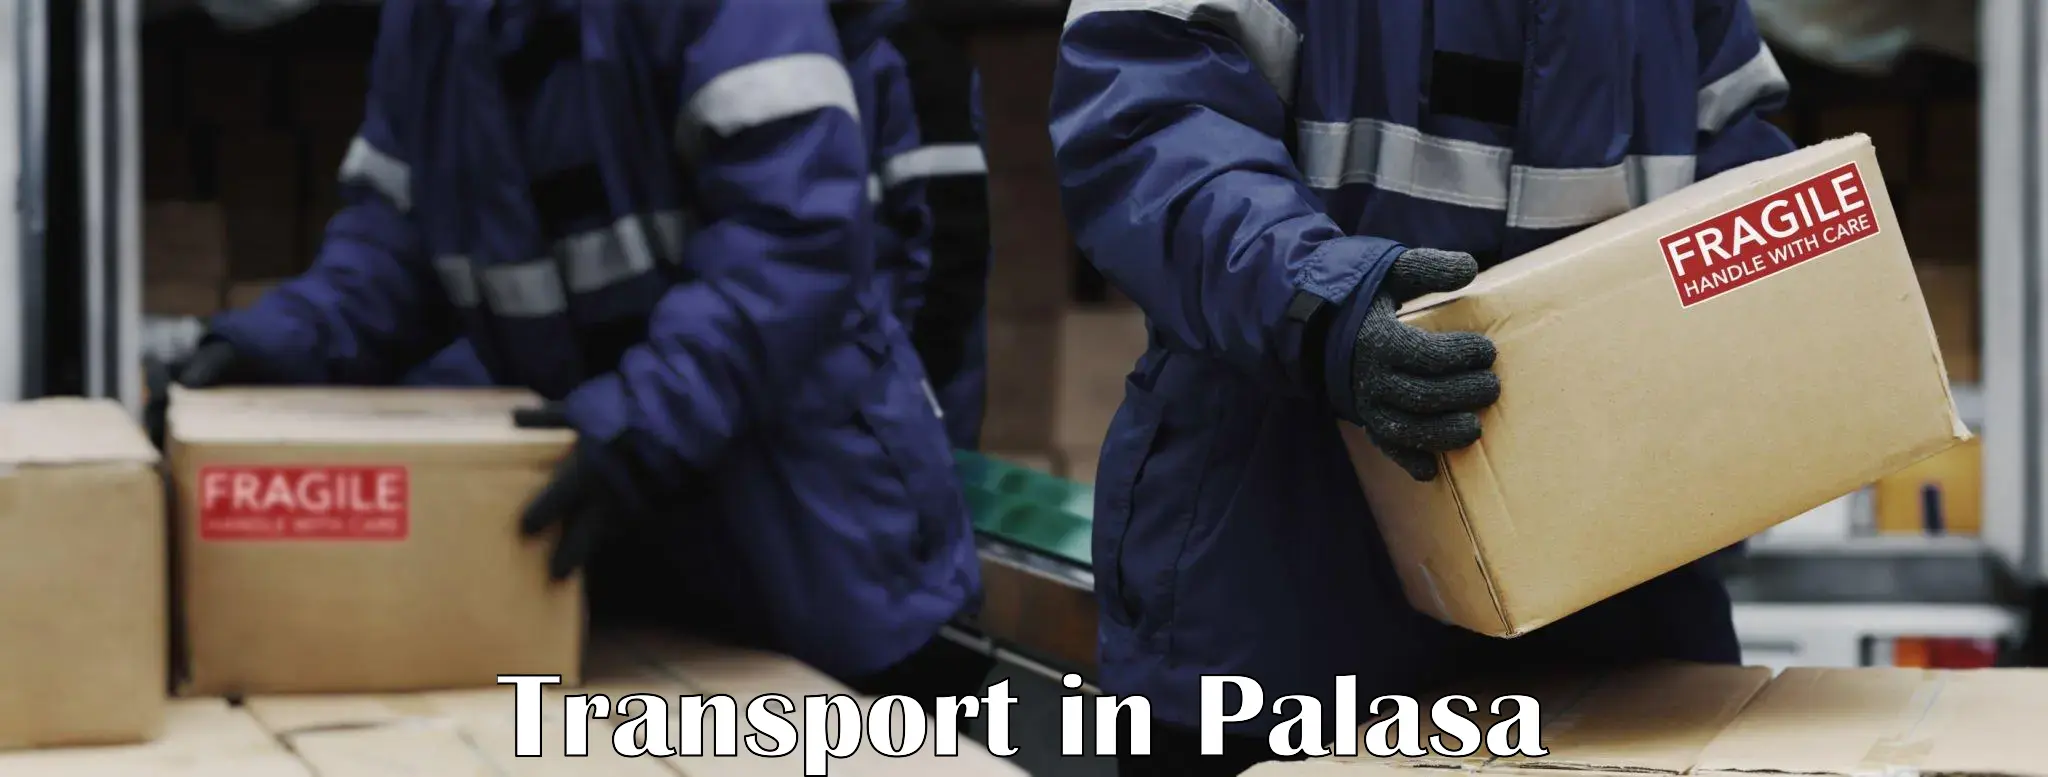 Interstate goods transport in Palasa